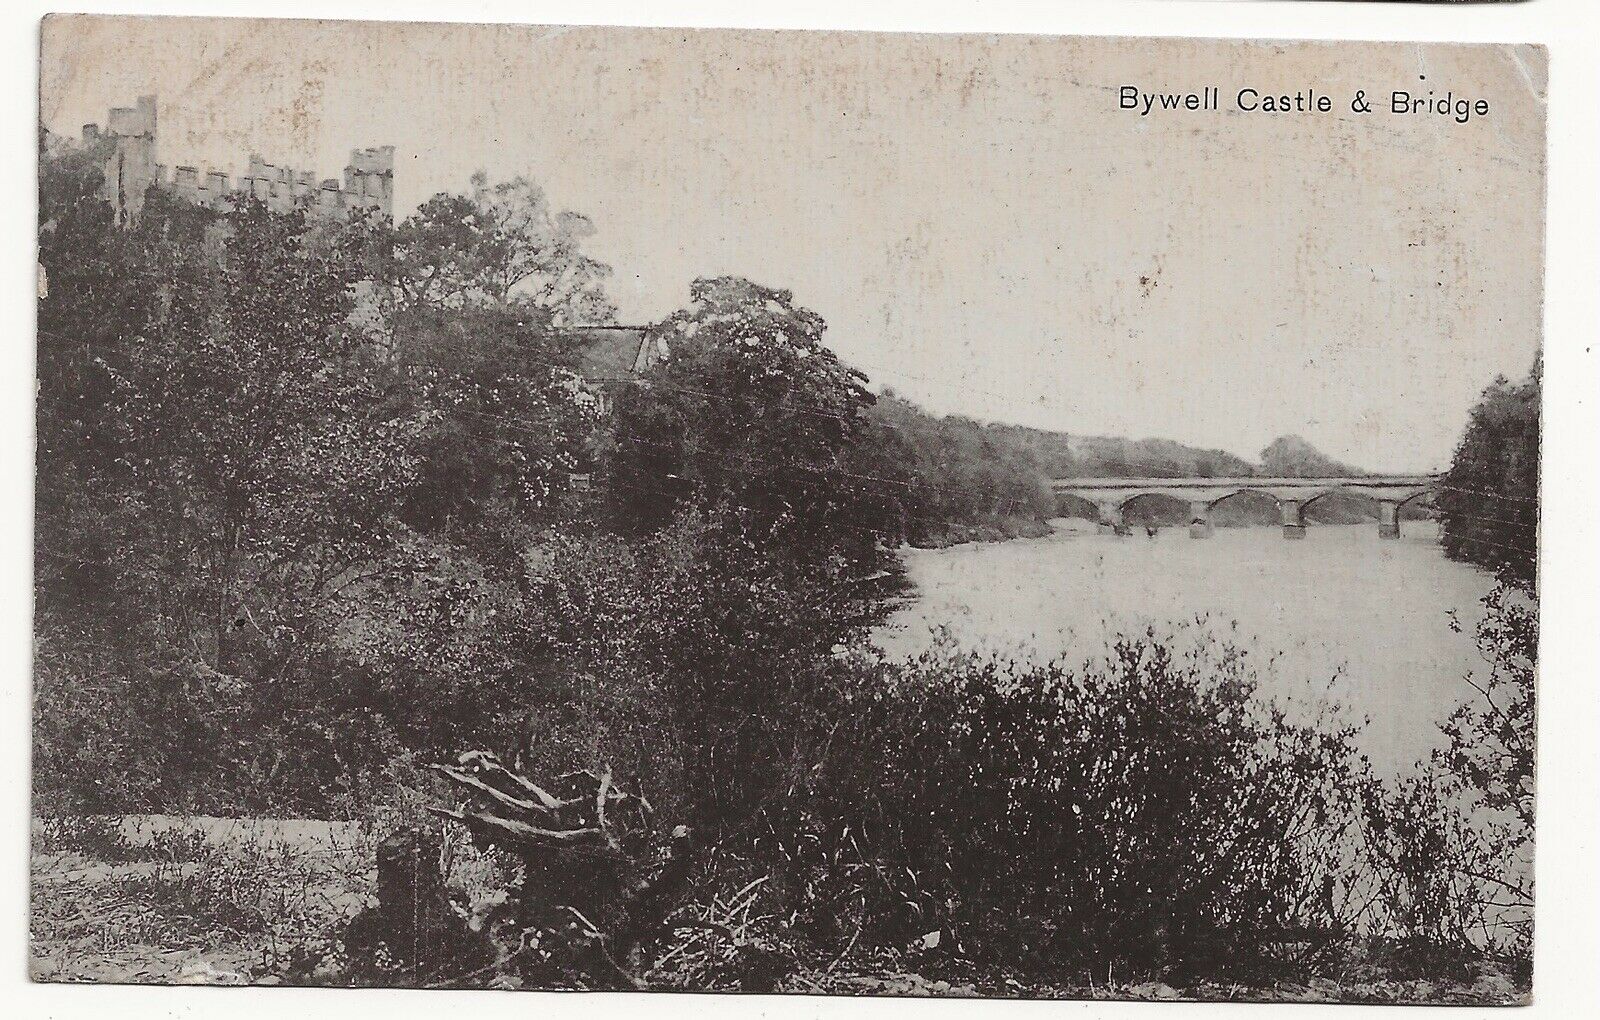 House Clearance - 1906 Service Bywell Castle & Bridge Corbridge Northumberland